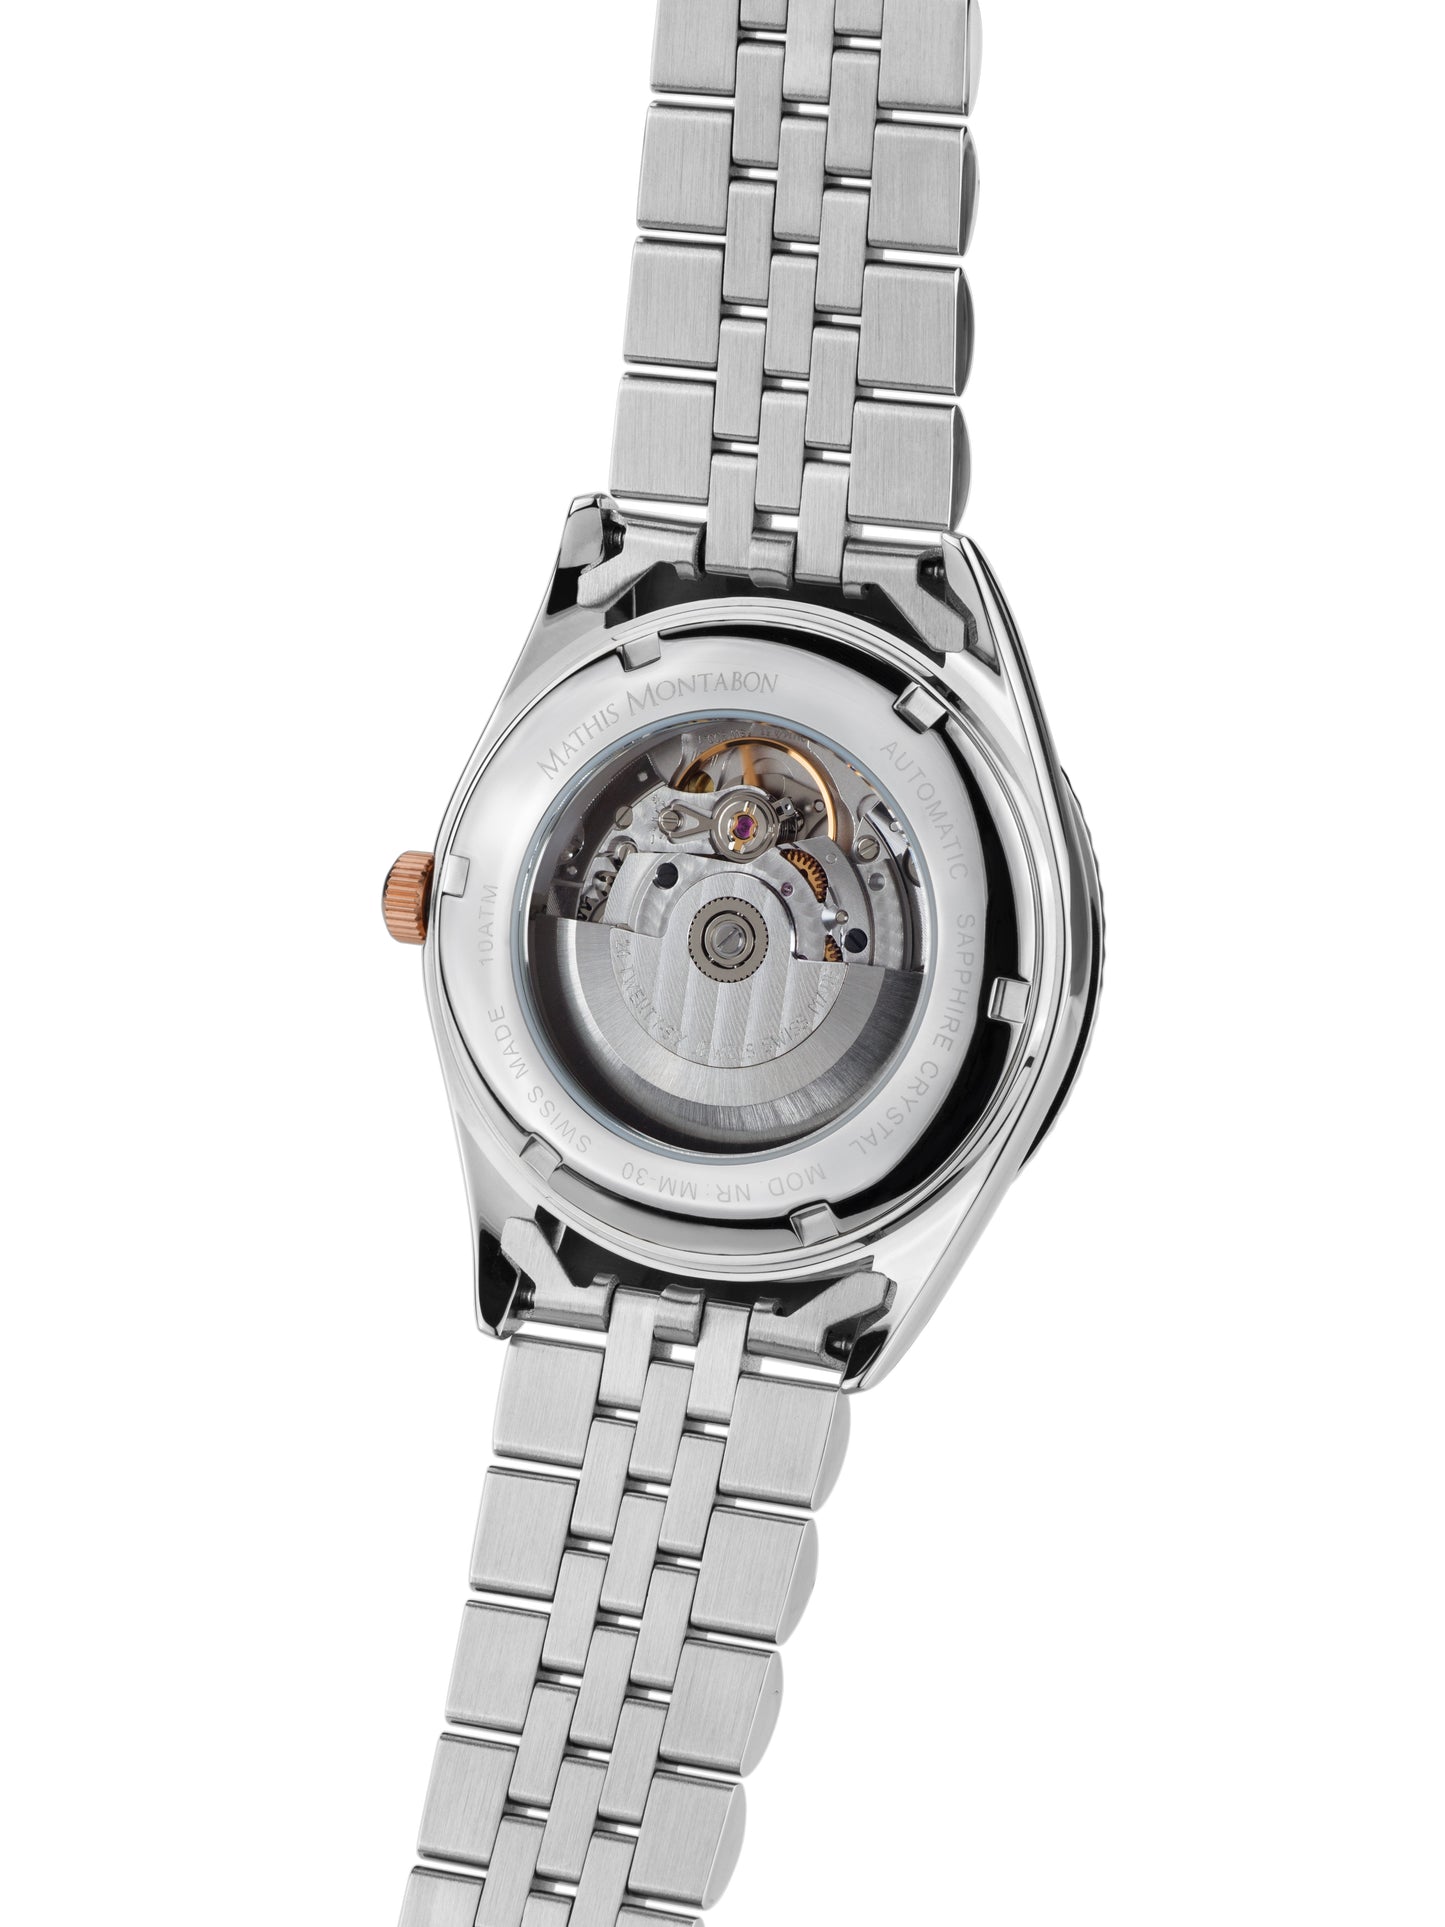 Automatic watches — Beauté de Suisse — Mathis Montabon — Rosegold IP Silber Two Tone